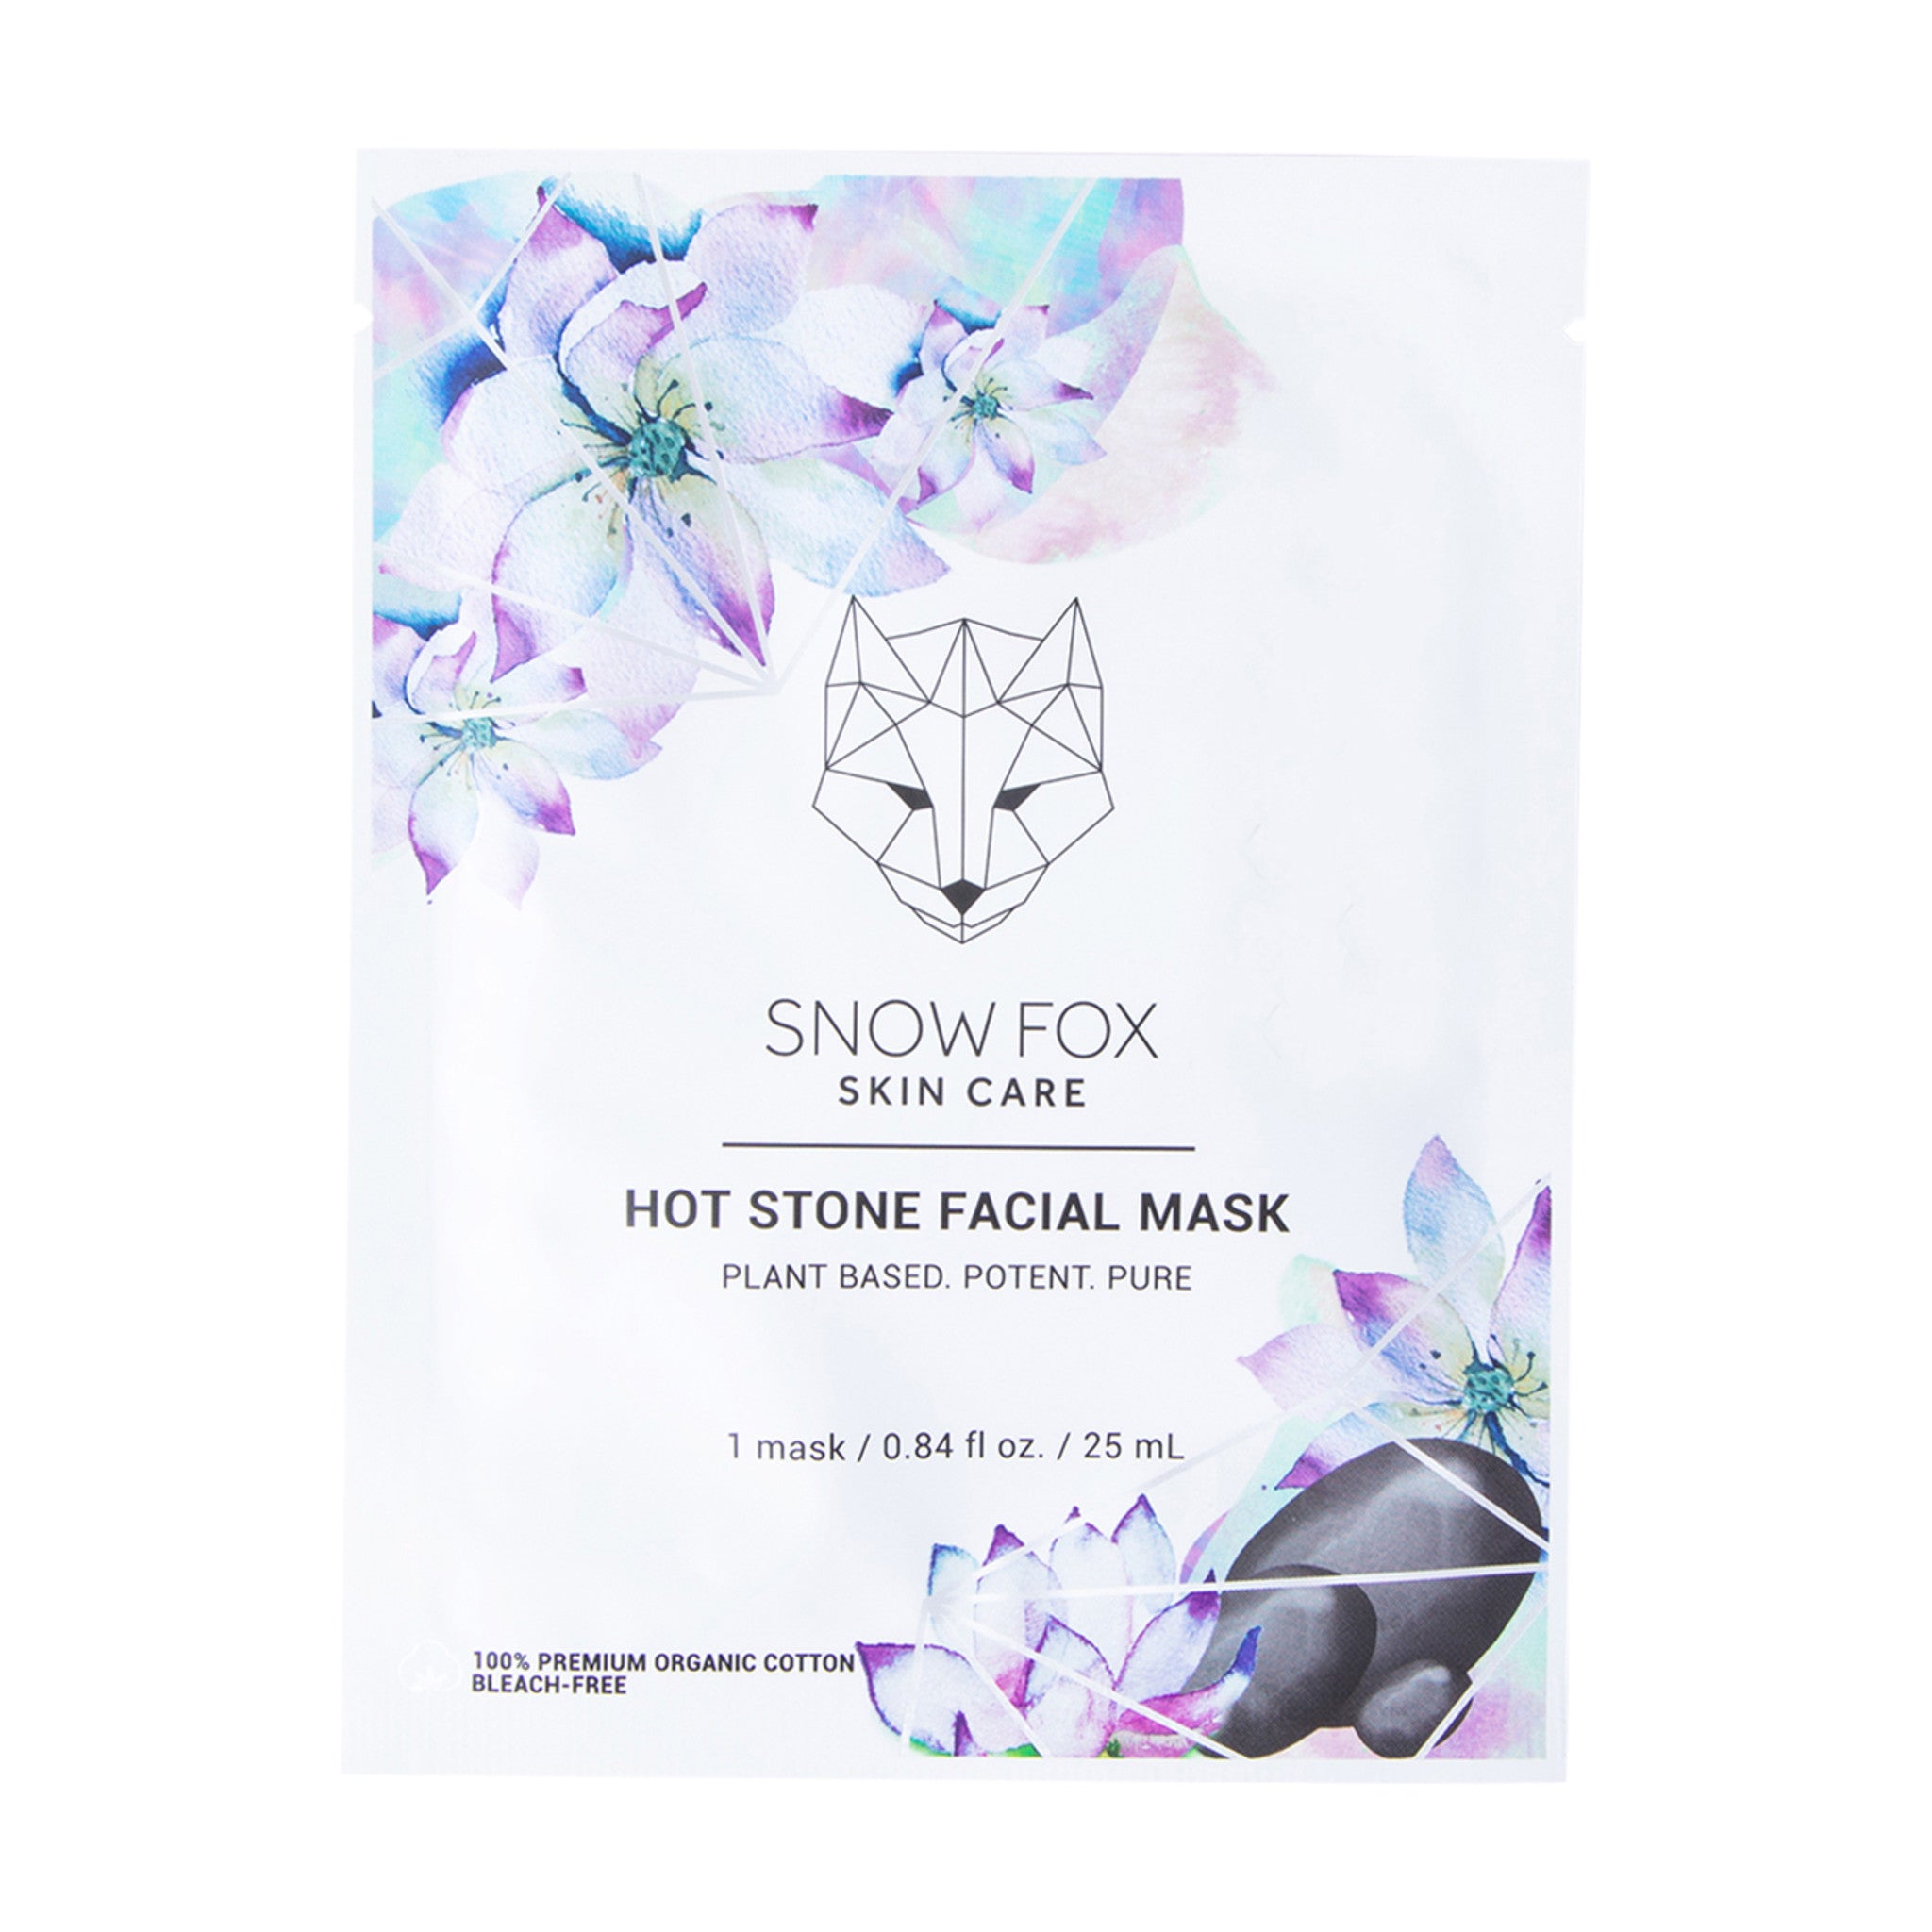 Snow Fox Skincare Hot Stone Facial Mask Size variant: 1 Treatment main image.